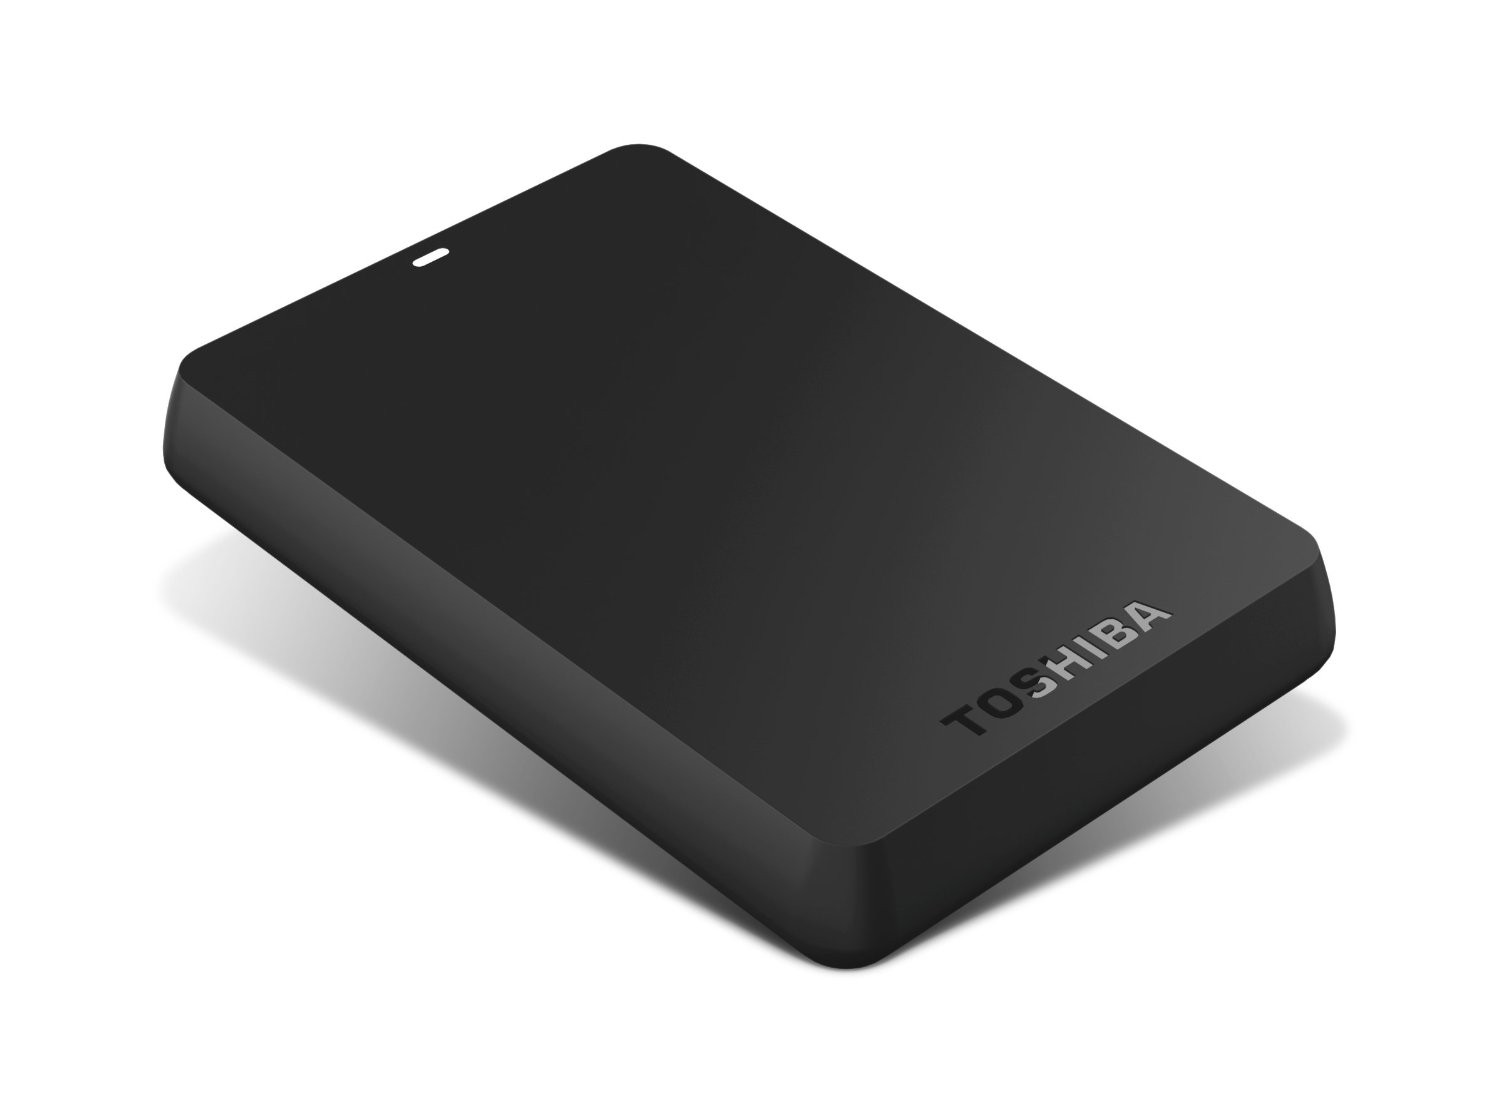 Disque dur externe 2.5 Toshiba Canvio Basics 1To USB3.0 - New PC Charenton